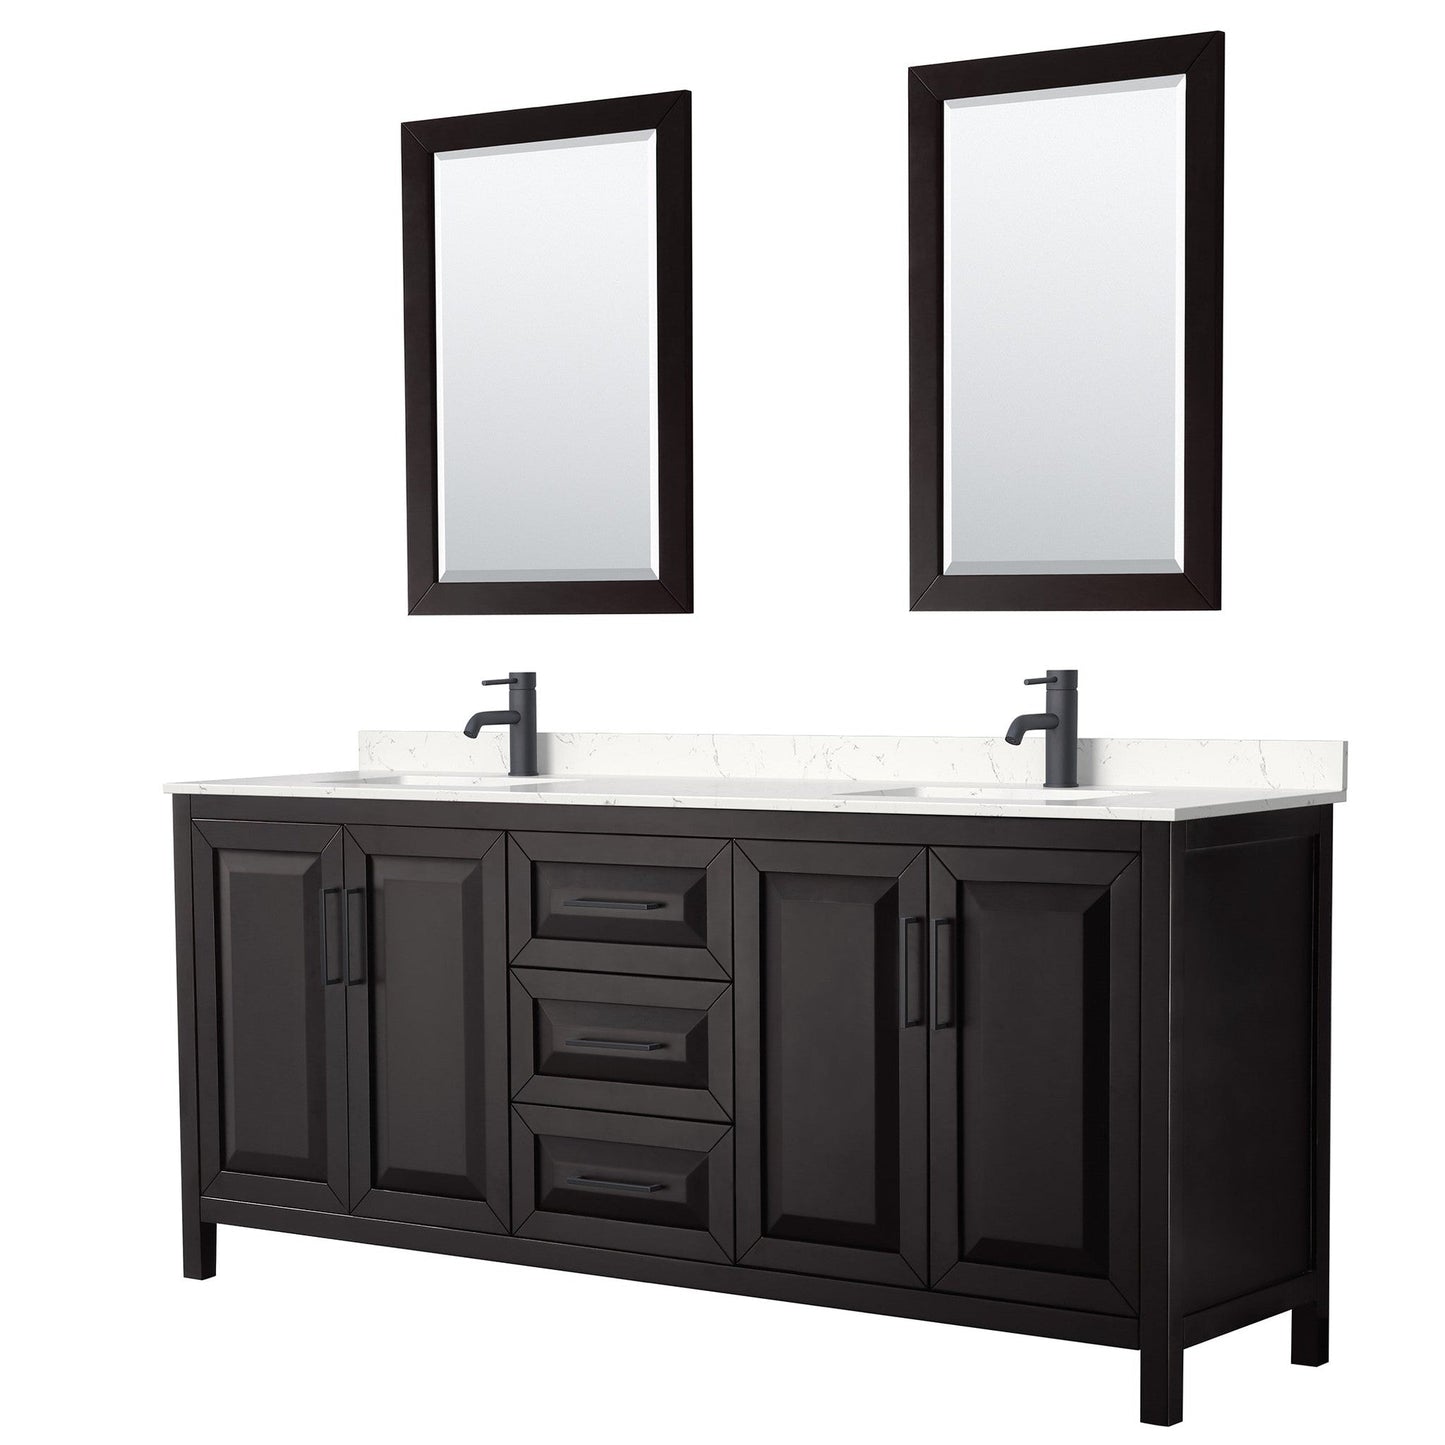 Daria 80" Double Bathroom Vanity in Dark Espresso, Carrara Cultured Marble Countertop, Undermount Square Sinks, Matte Black Trim, 24" Mirrors